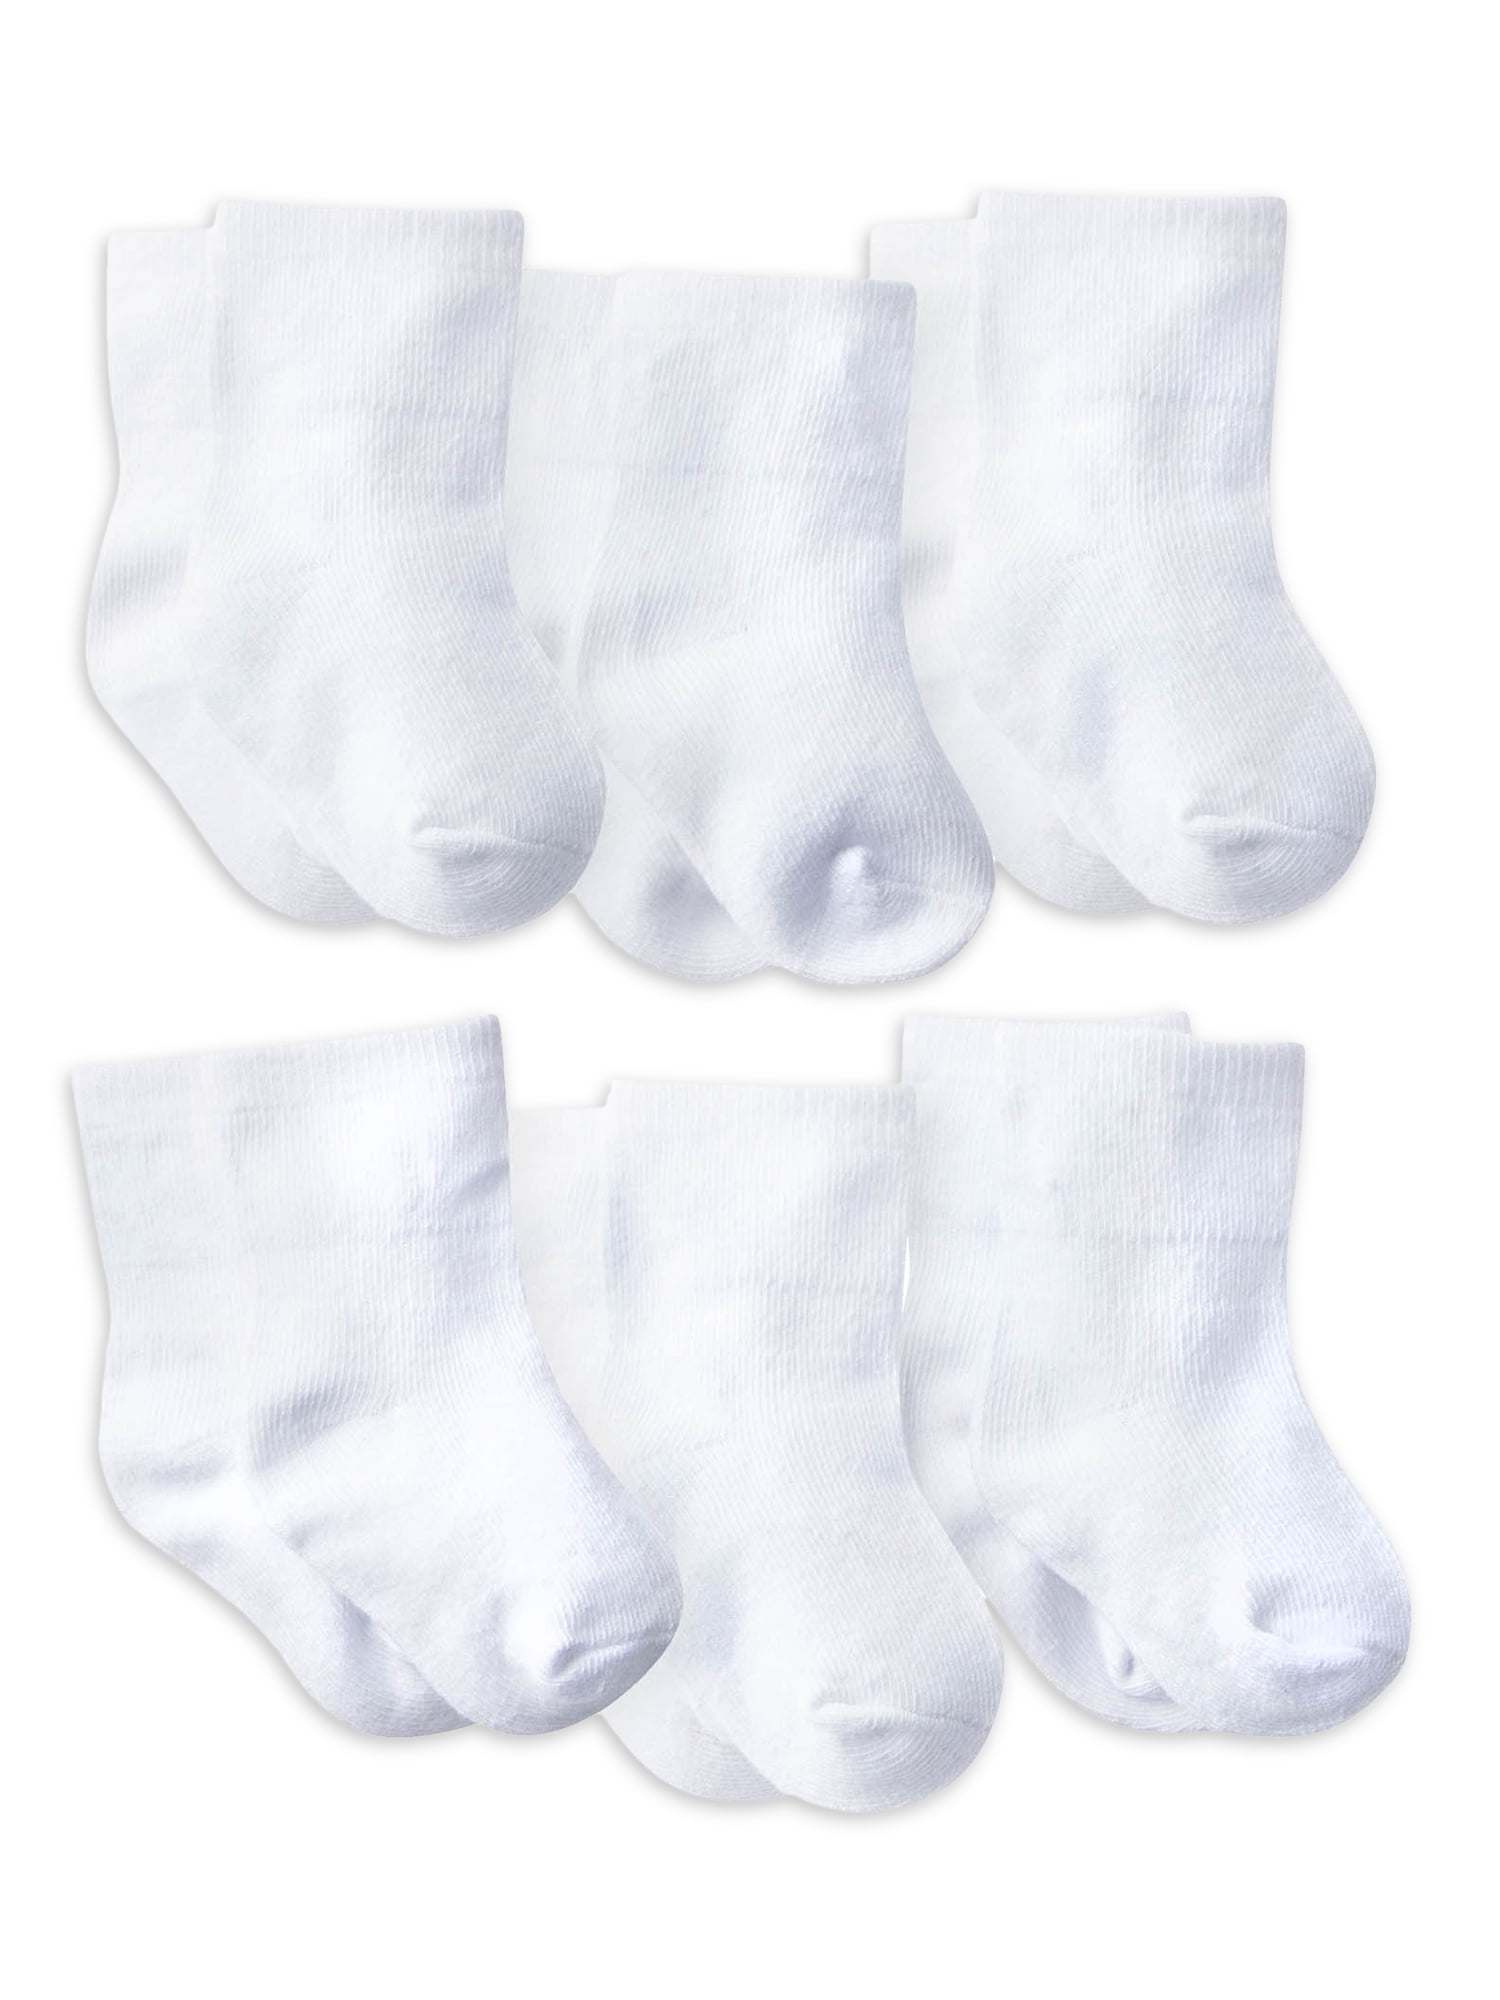 Gerber Baby Boys and Girls Unisex Jersey Socks, 6 Pack, Sizes Newborn - 6 Months